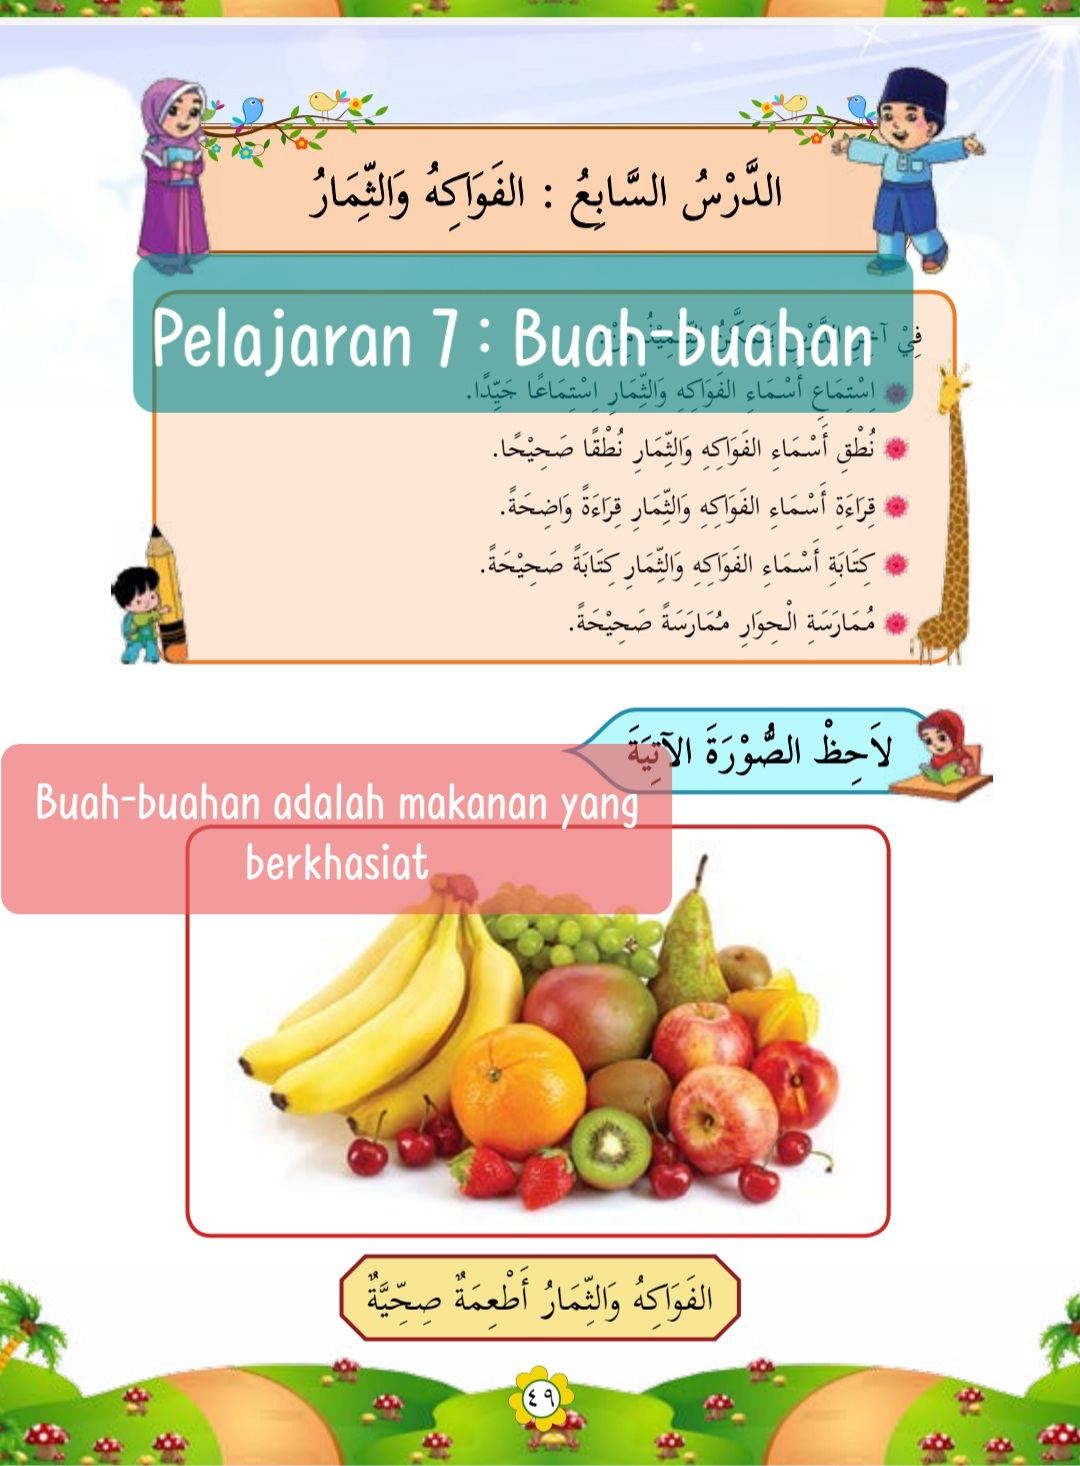 Arab tahun 5 buahan bahasa dalam buah (Buah